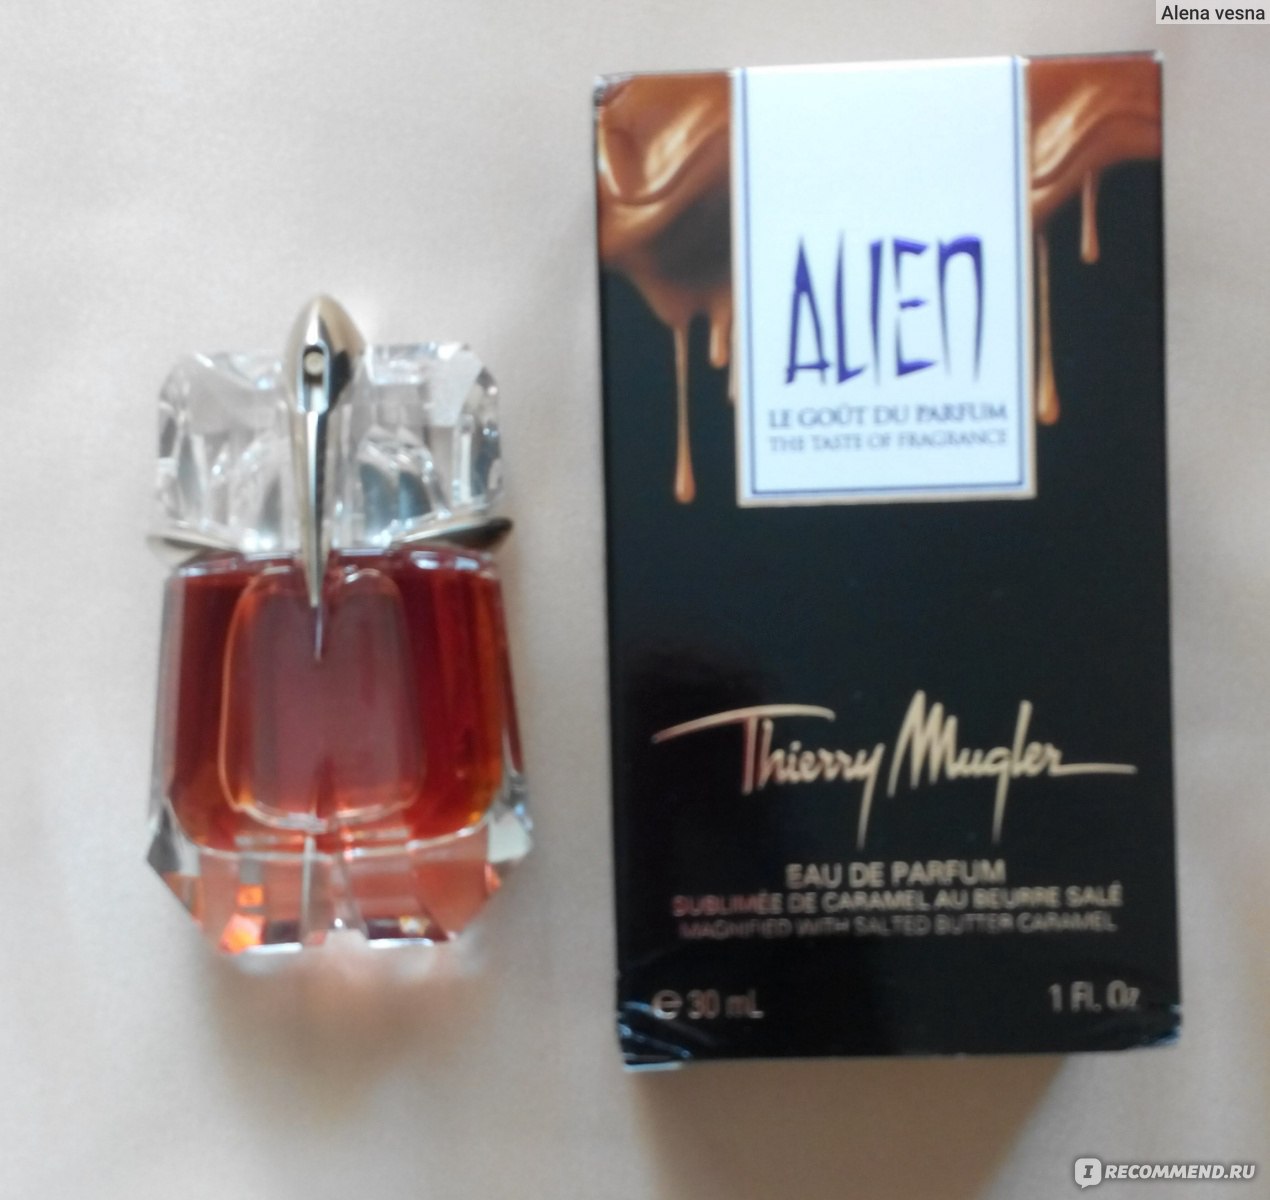 Thierry Mugler The Taste of Fragrance Alien Mugler фото